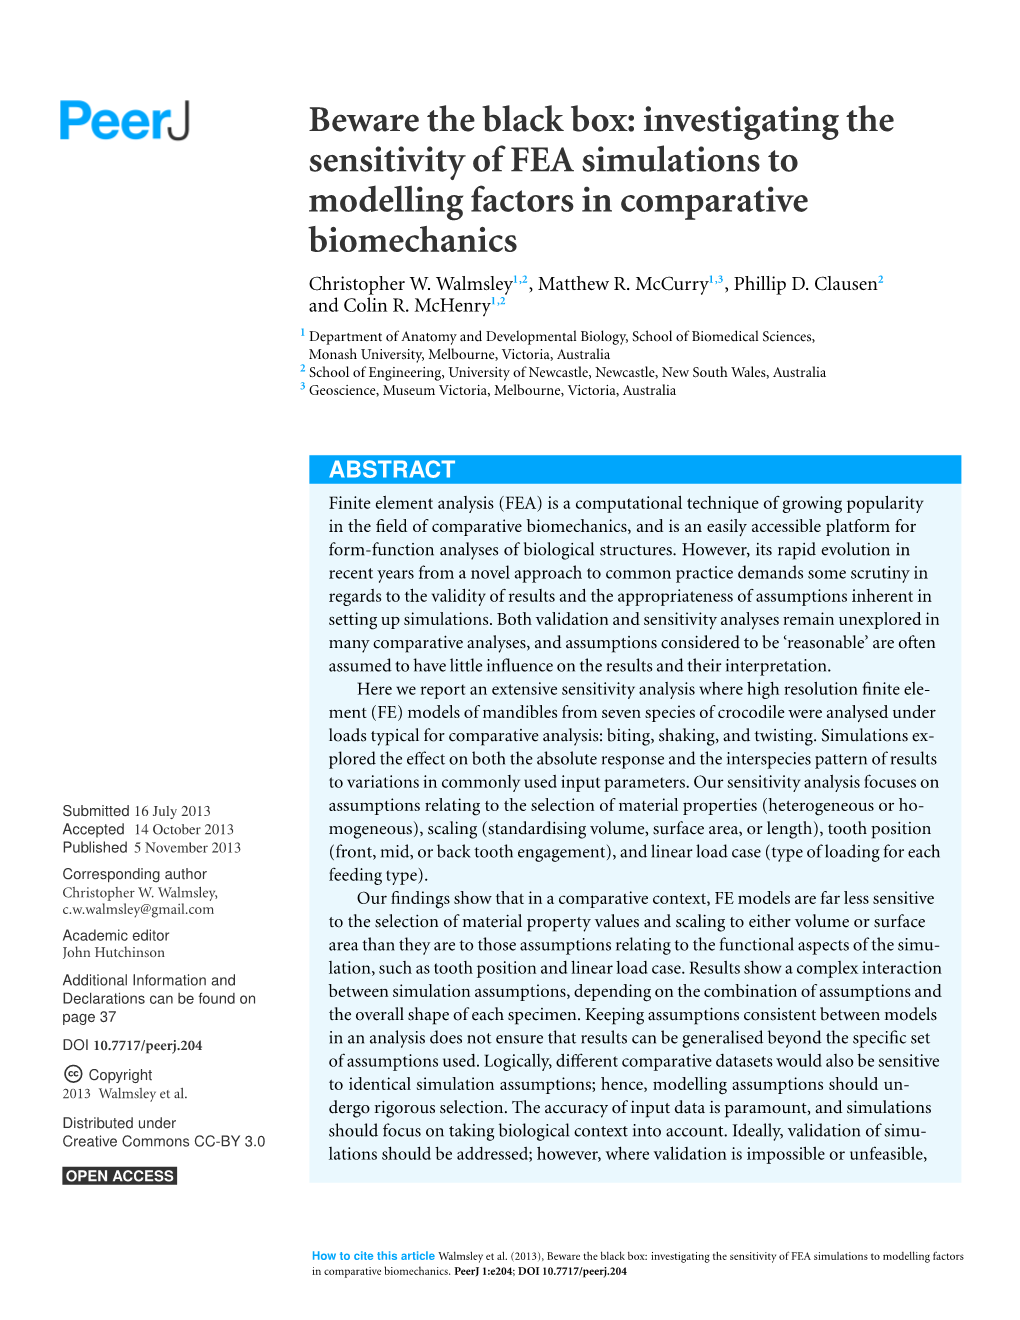 Beware the Black Box: Investigating the Sensitivity of FEA Simulations to Modelling Factors in Comparative Biomechanics Christopher W